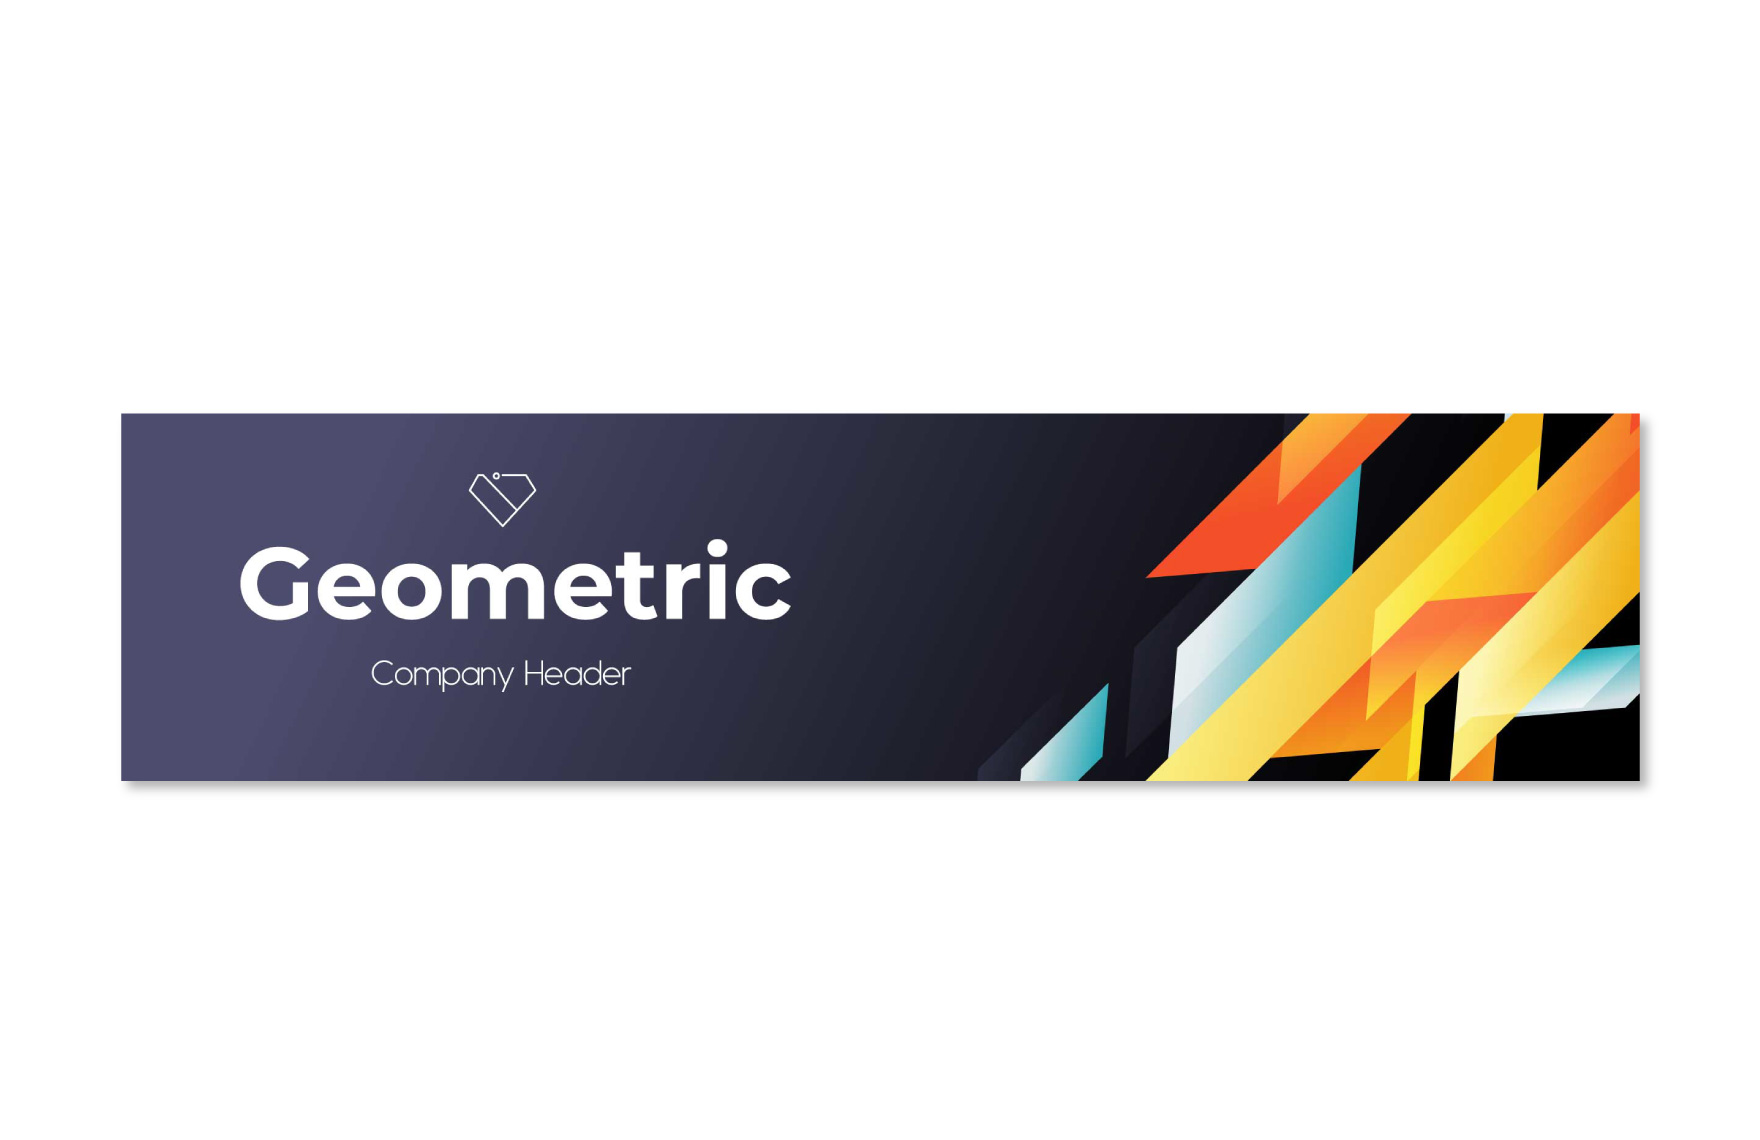 Geometric Company Header